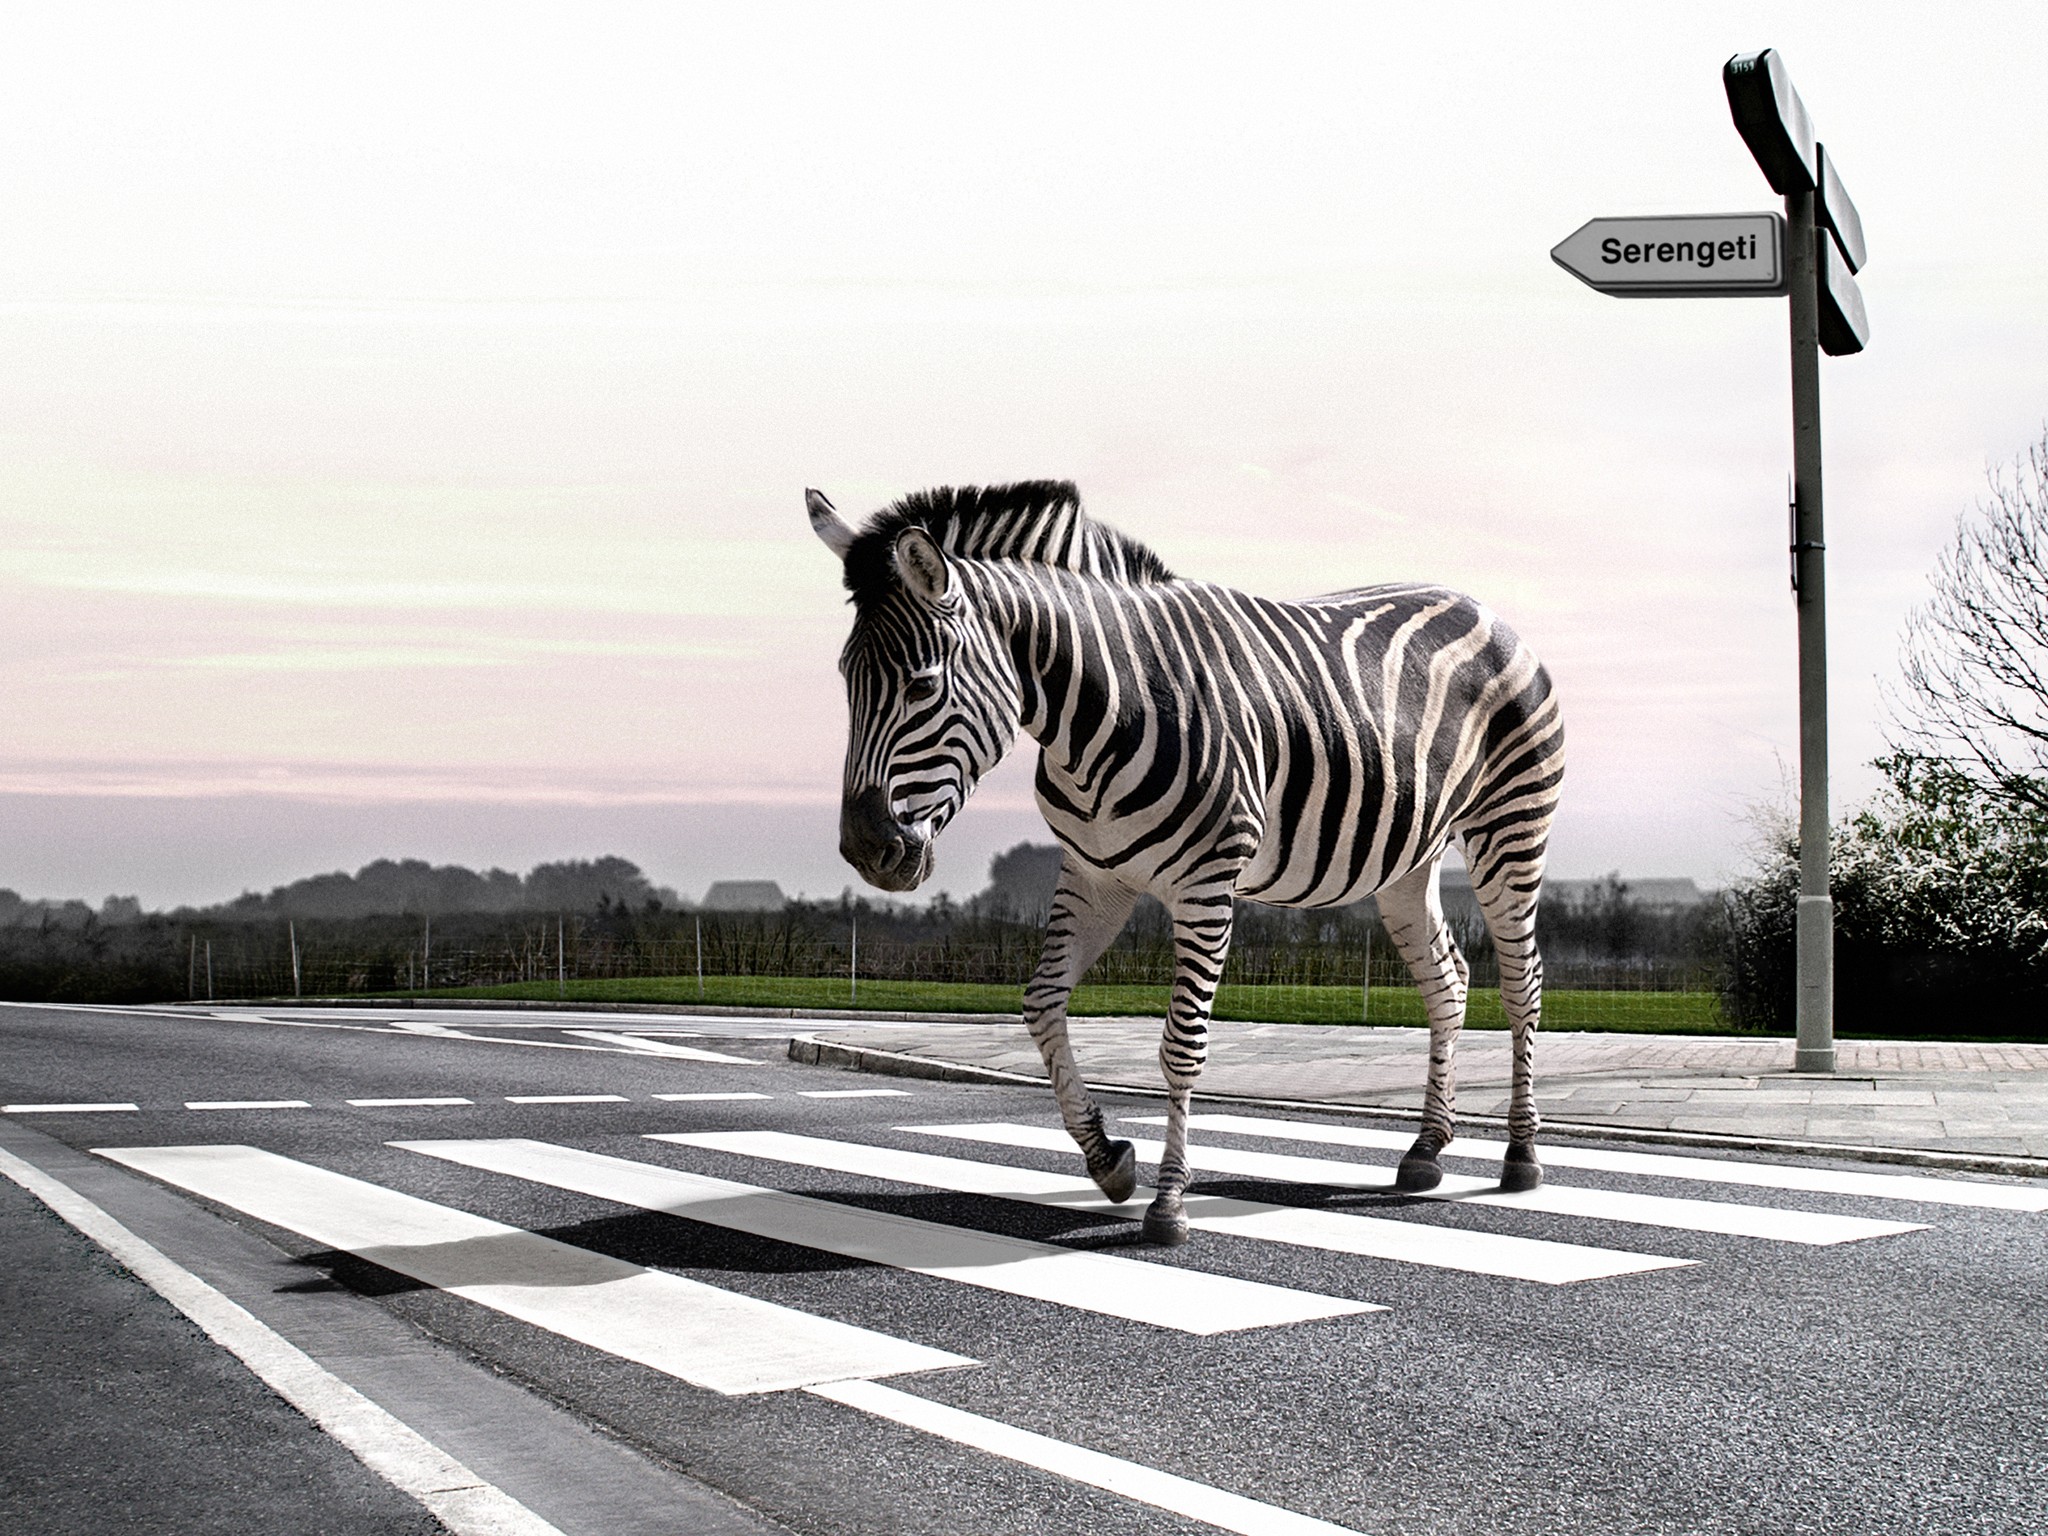 General 2048x1536 animals humor digital art zebras road path crosswalk mammals sign street